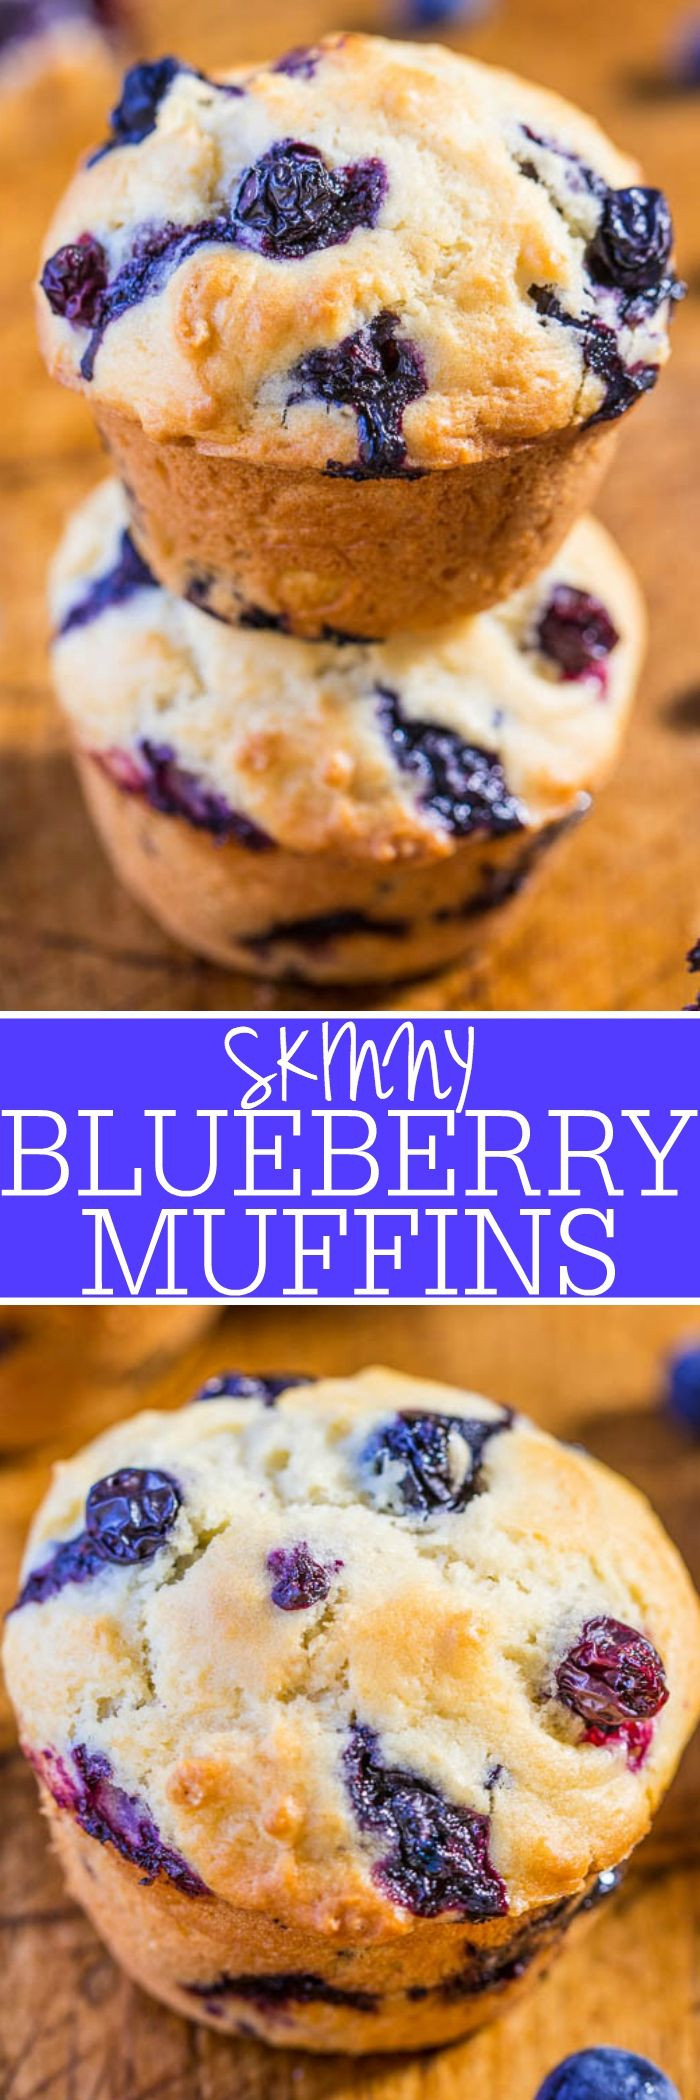 Low Calorie Blueberry Desserts
 17 best ideas about Low Sugar on Pinterest